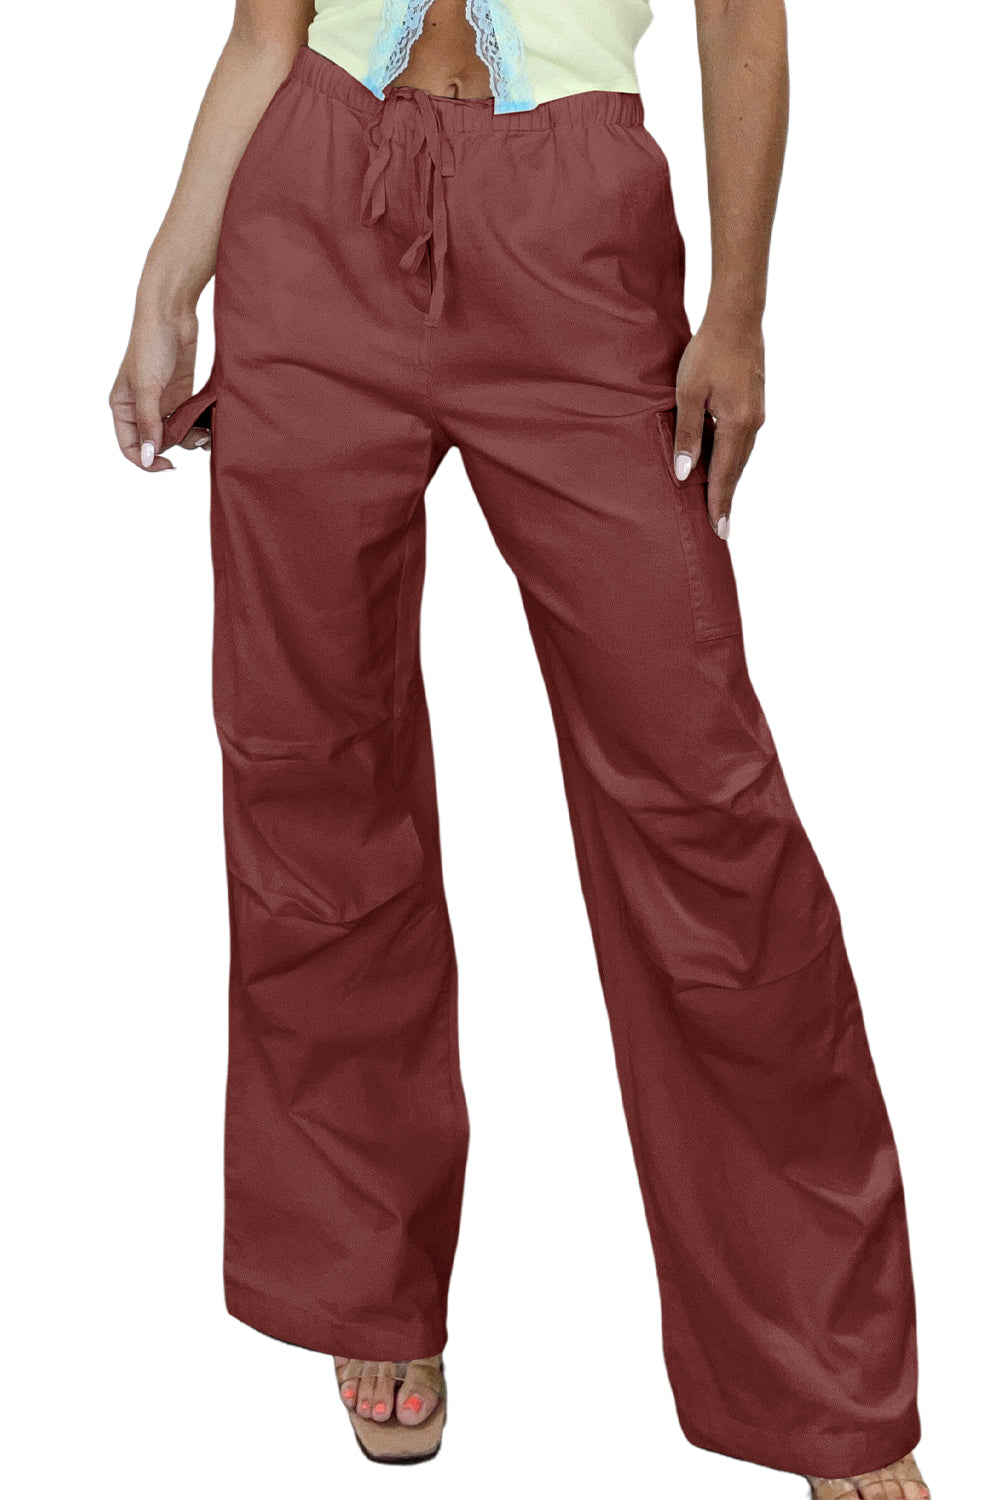 Mineral Red Solid Color Drawstring Waist Wide Leg Cargo Womens Pants - US2EInc Apparel Plug Ltd. Co